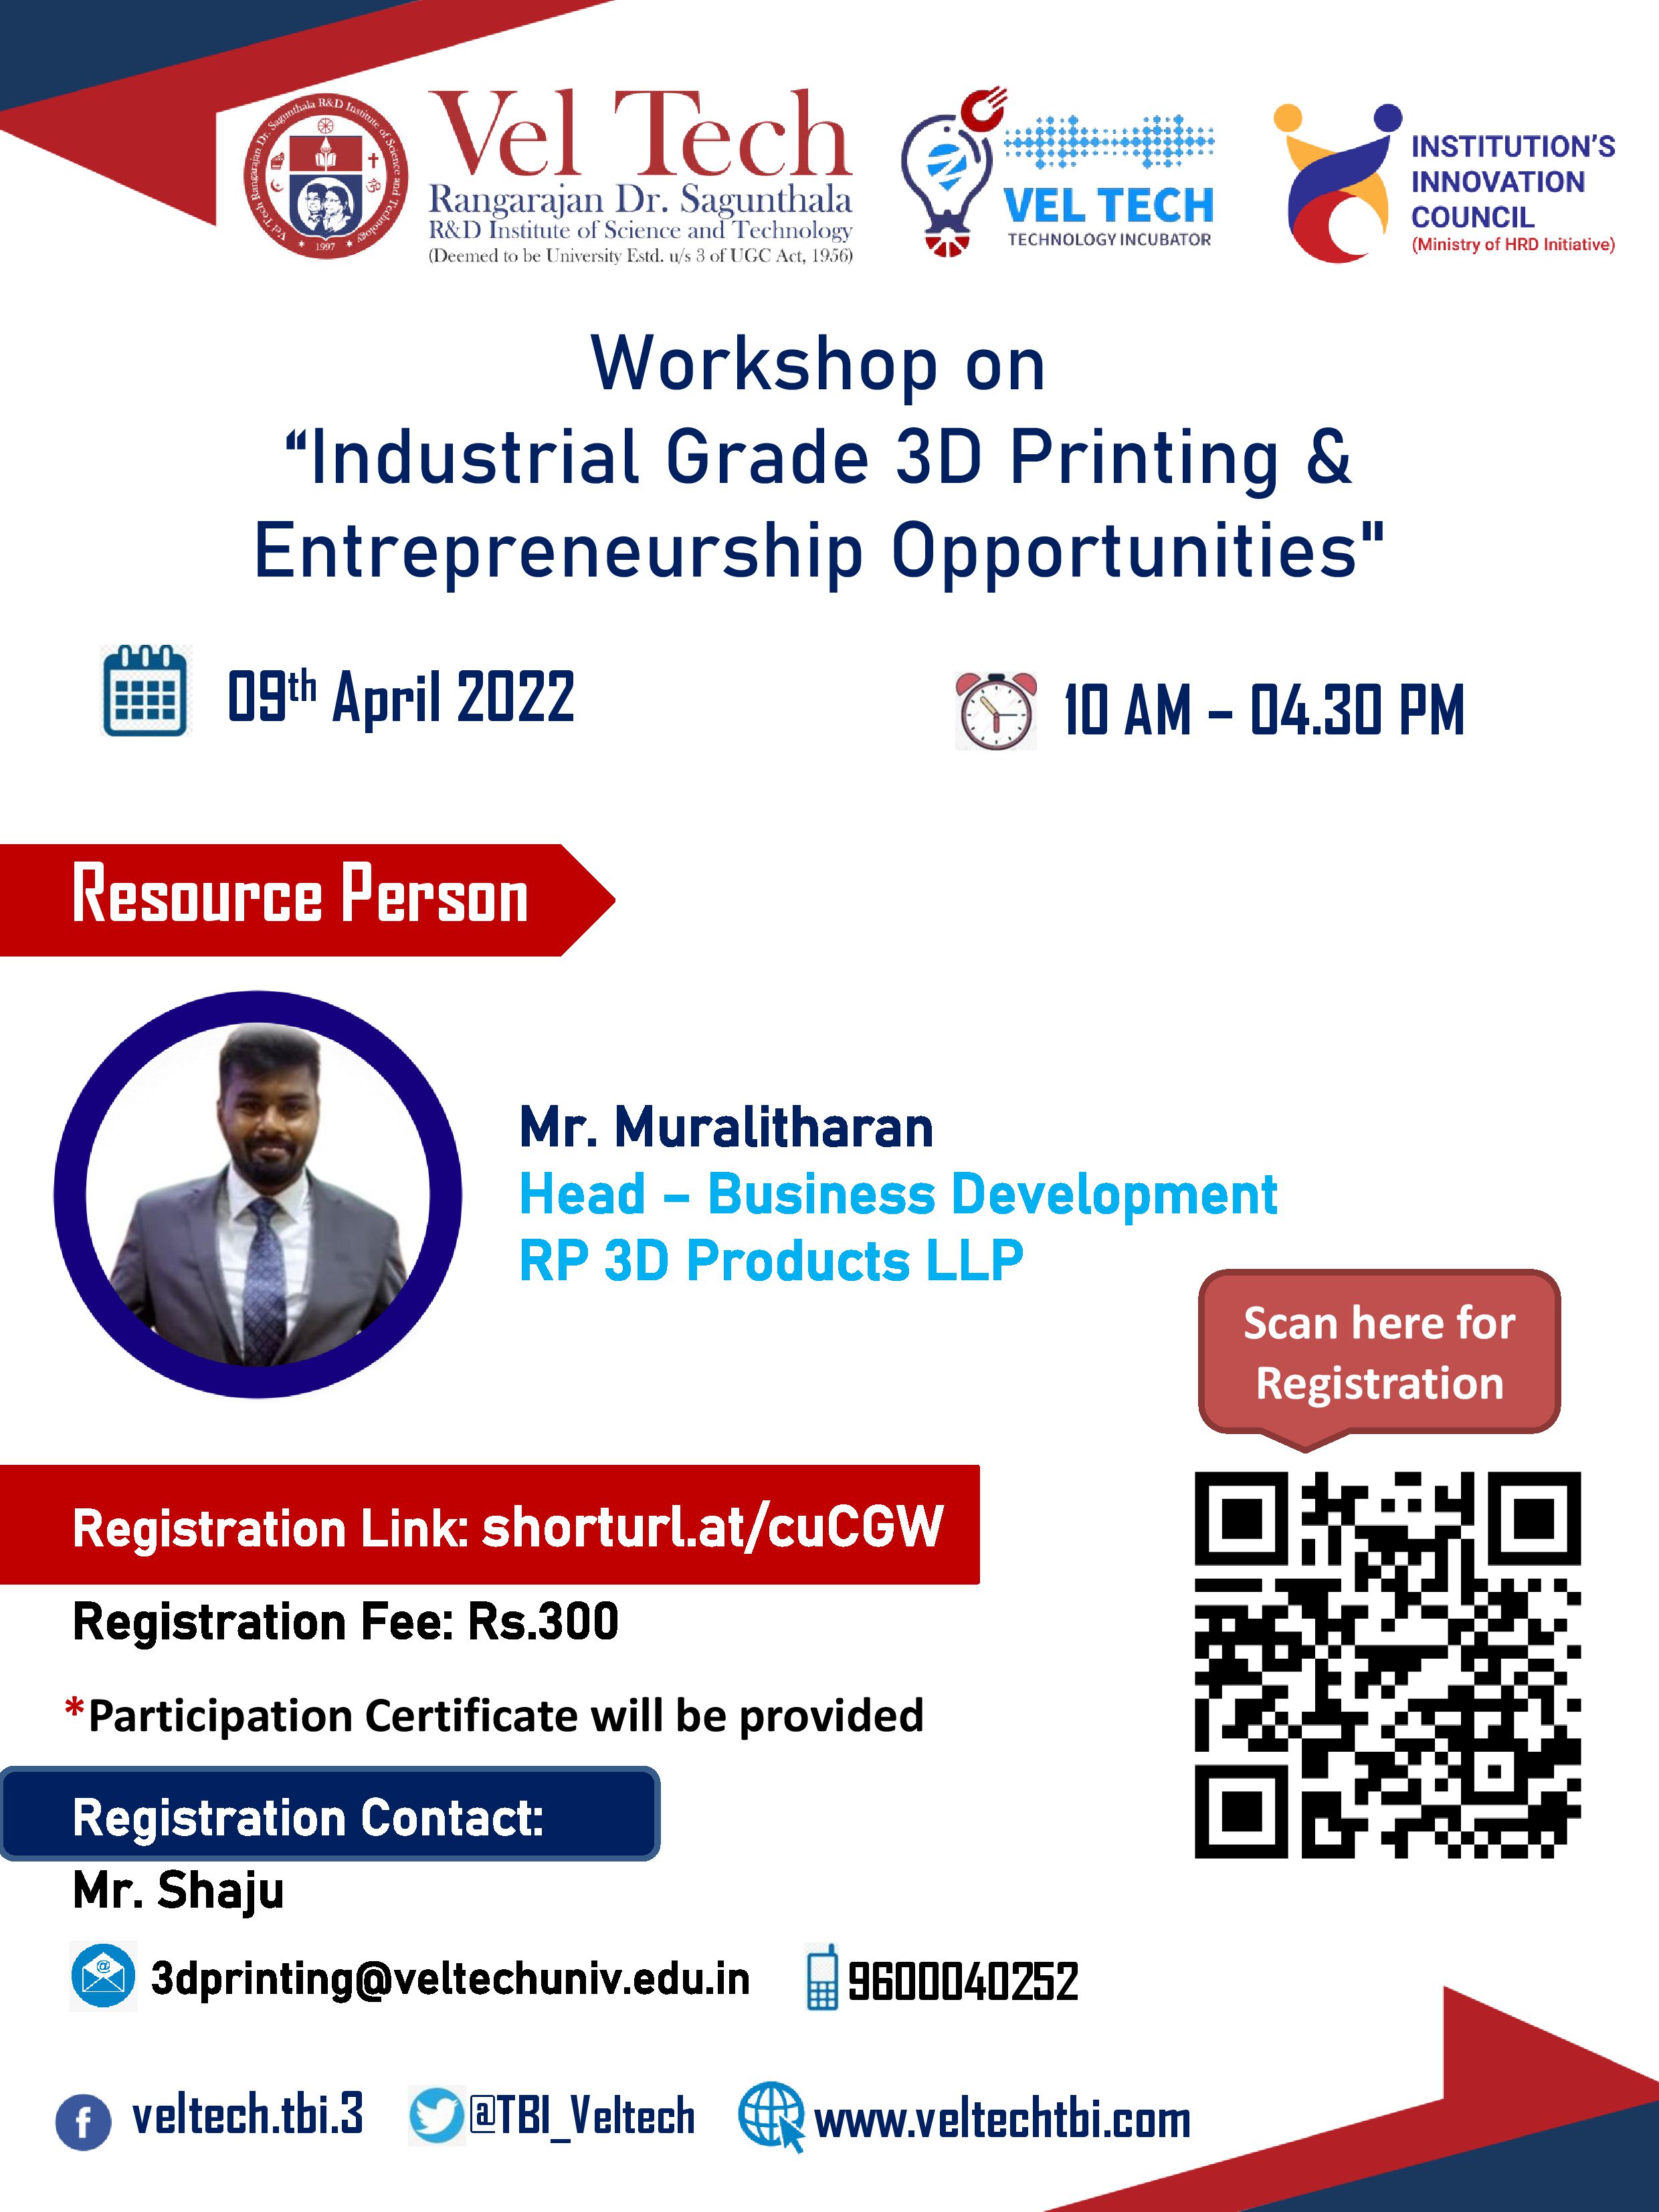 Workshop on Industrial Grade 3D Printing & Entrepreneurship Opportunities 2022